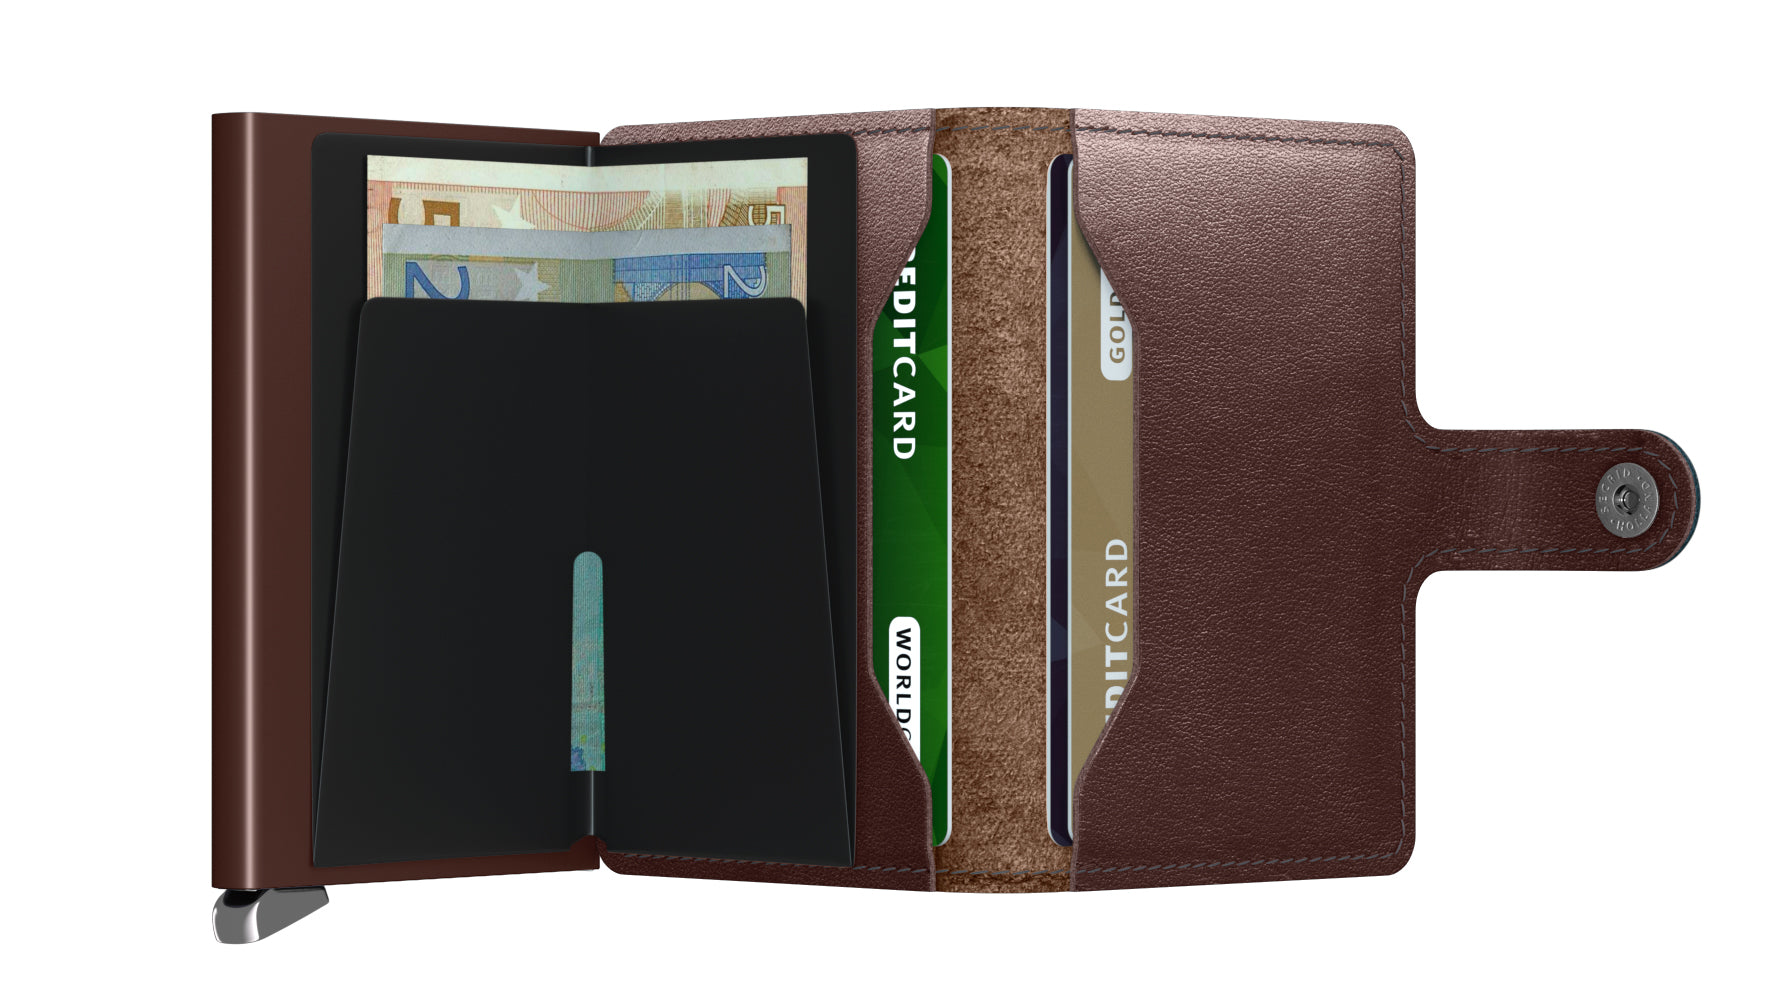 SECRID Premium Mini Wallet Dusk Dark Brown